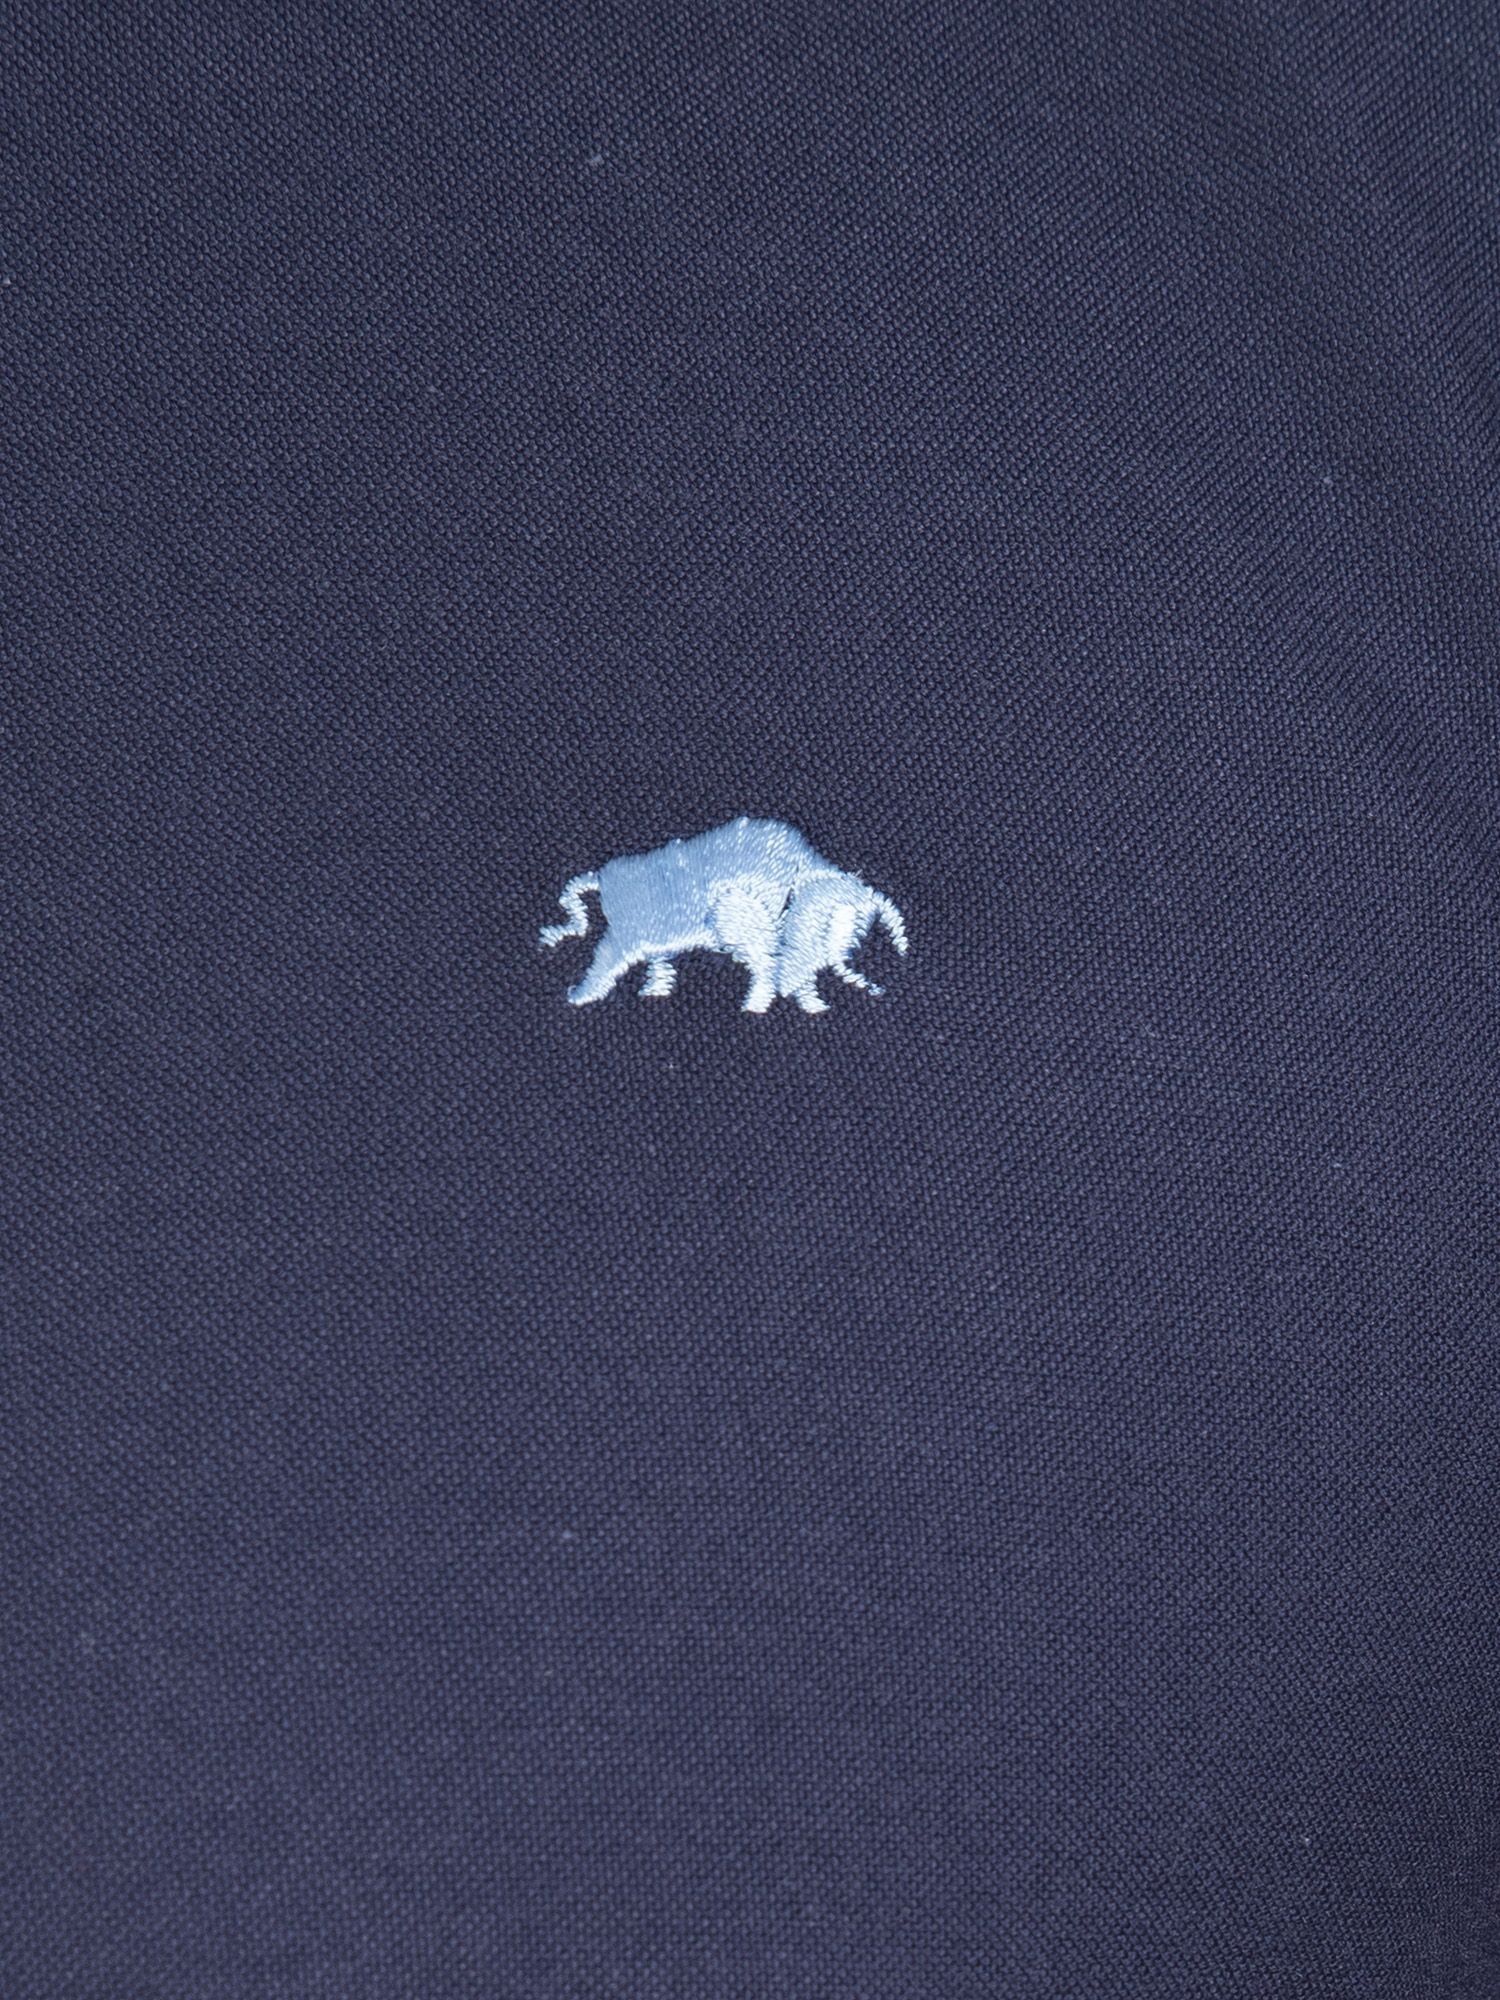 Raging Bull Classic Oxford Shirt, Navy, S